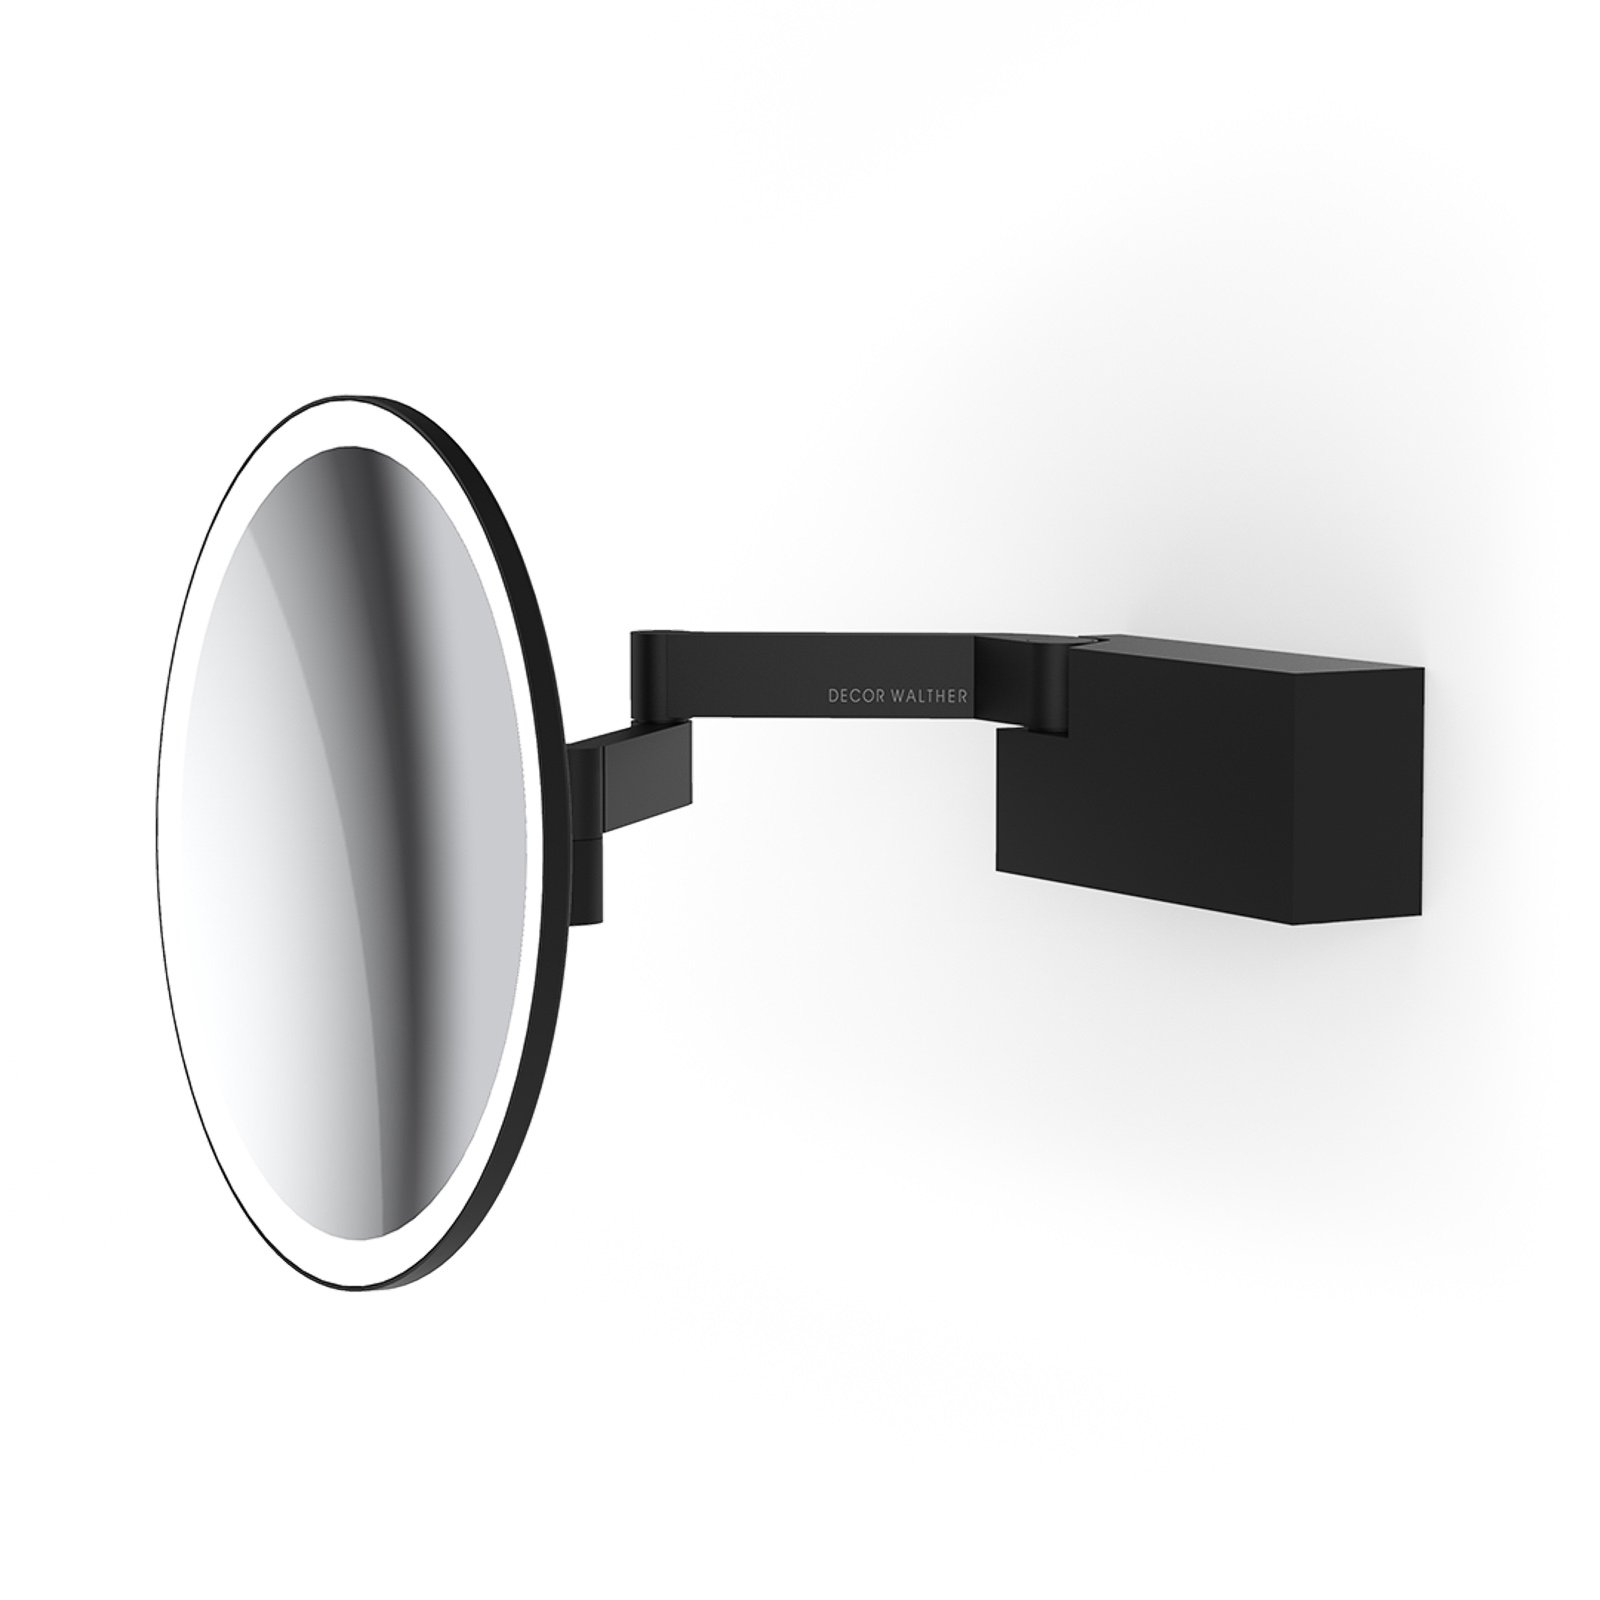 Decor Walther Vision R LED kozmetikai tükör fekete